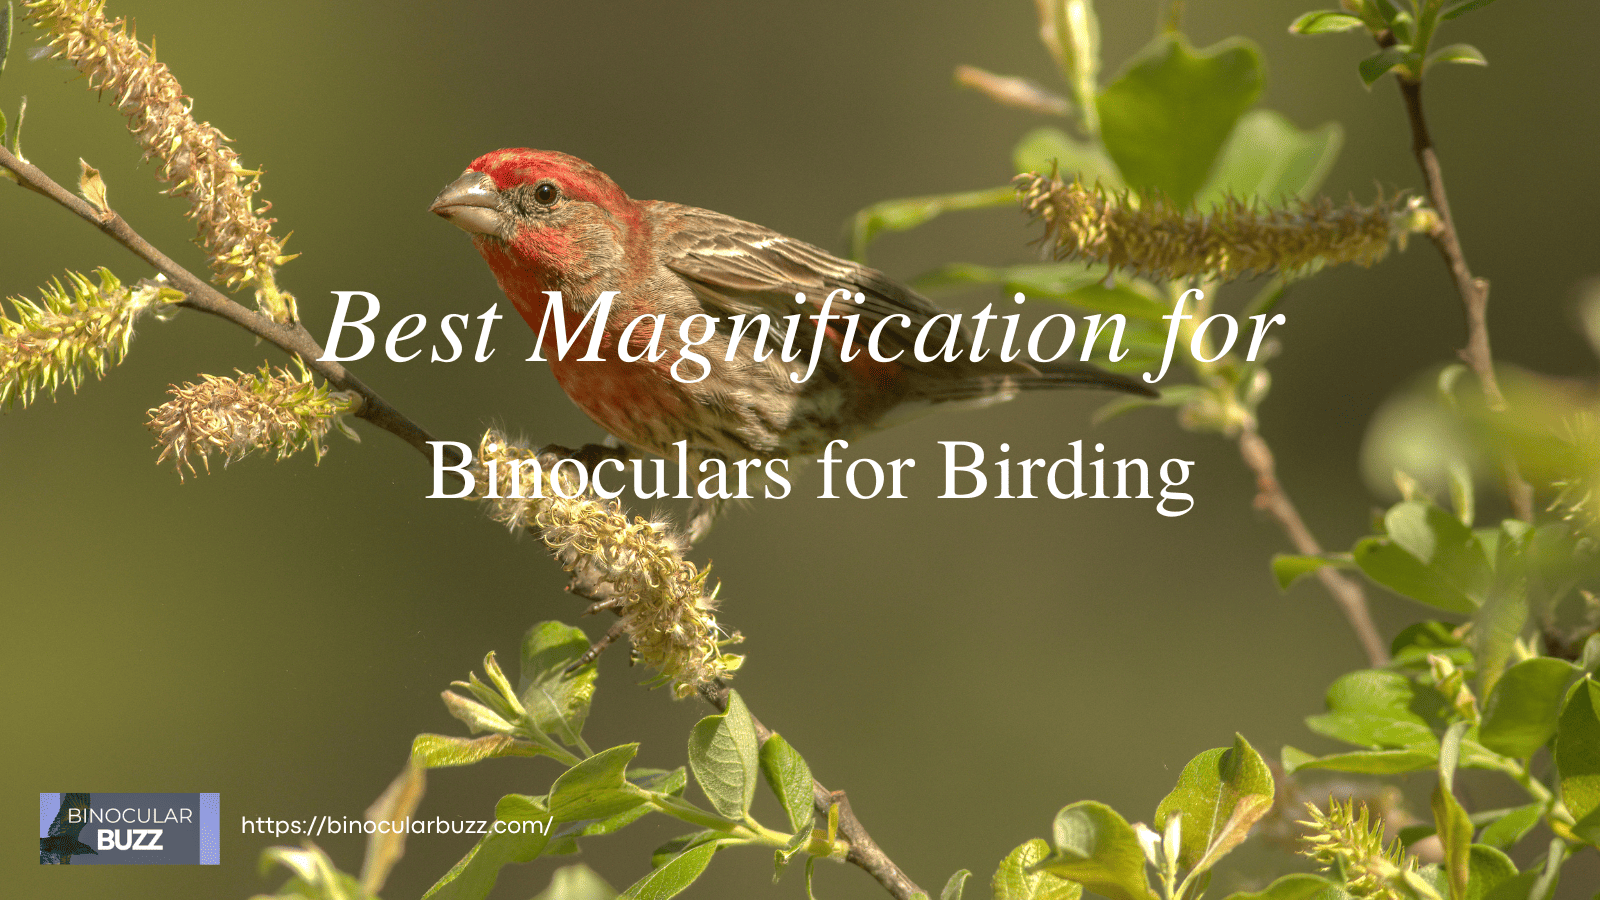 Best Magnification for Binoculars for Birding